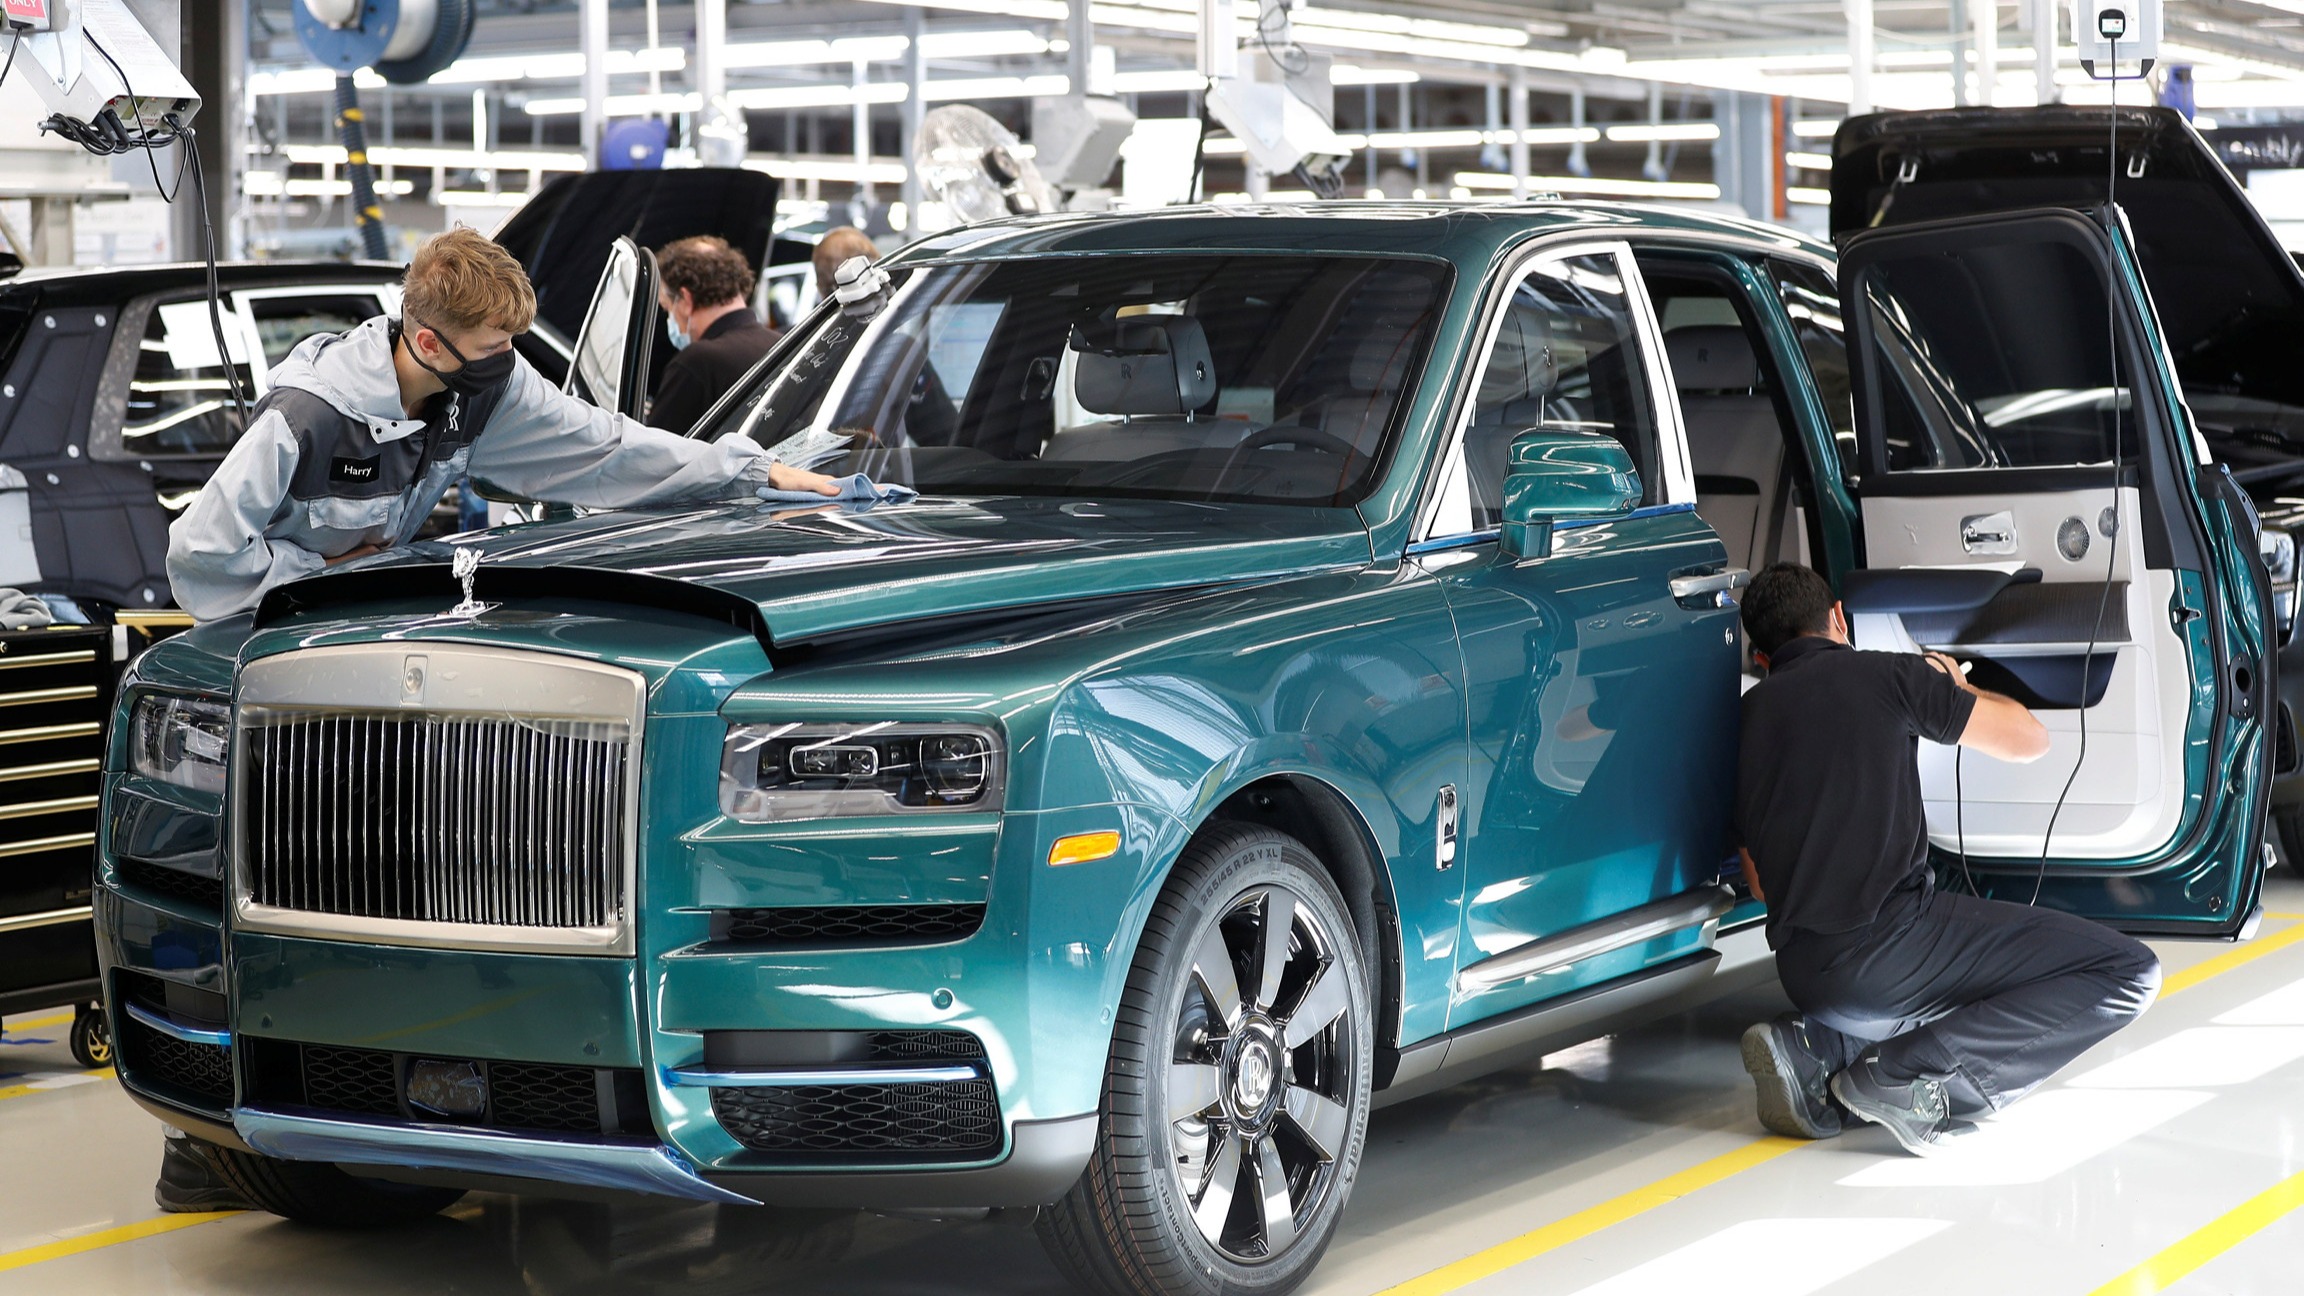 Rolls Royce Share Price Soars Amid Major Forecast Upgrade